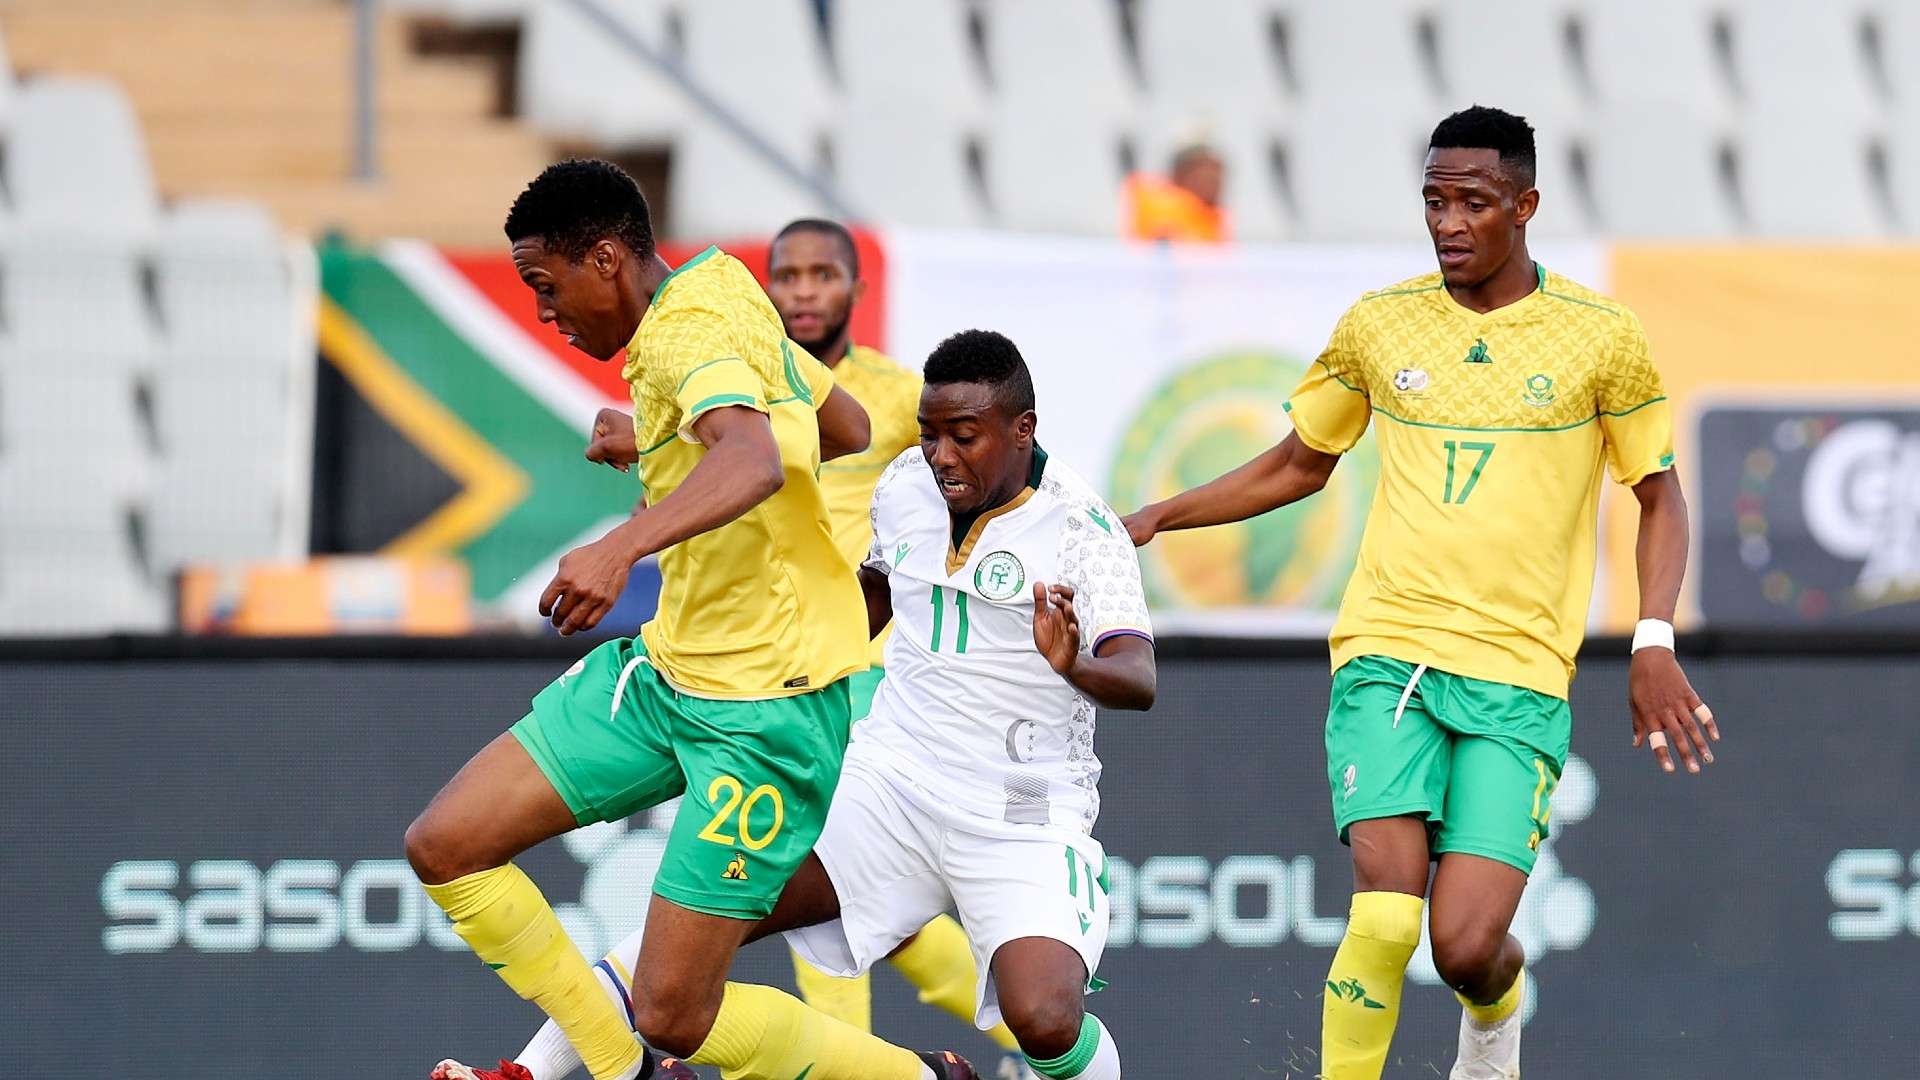 Sammy Seabi & George Matlou, Bafana Bafana & Ali Nassim, Comoros, July 2022